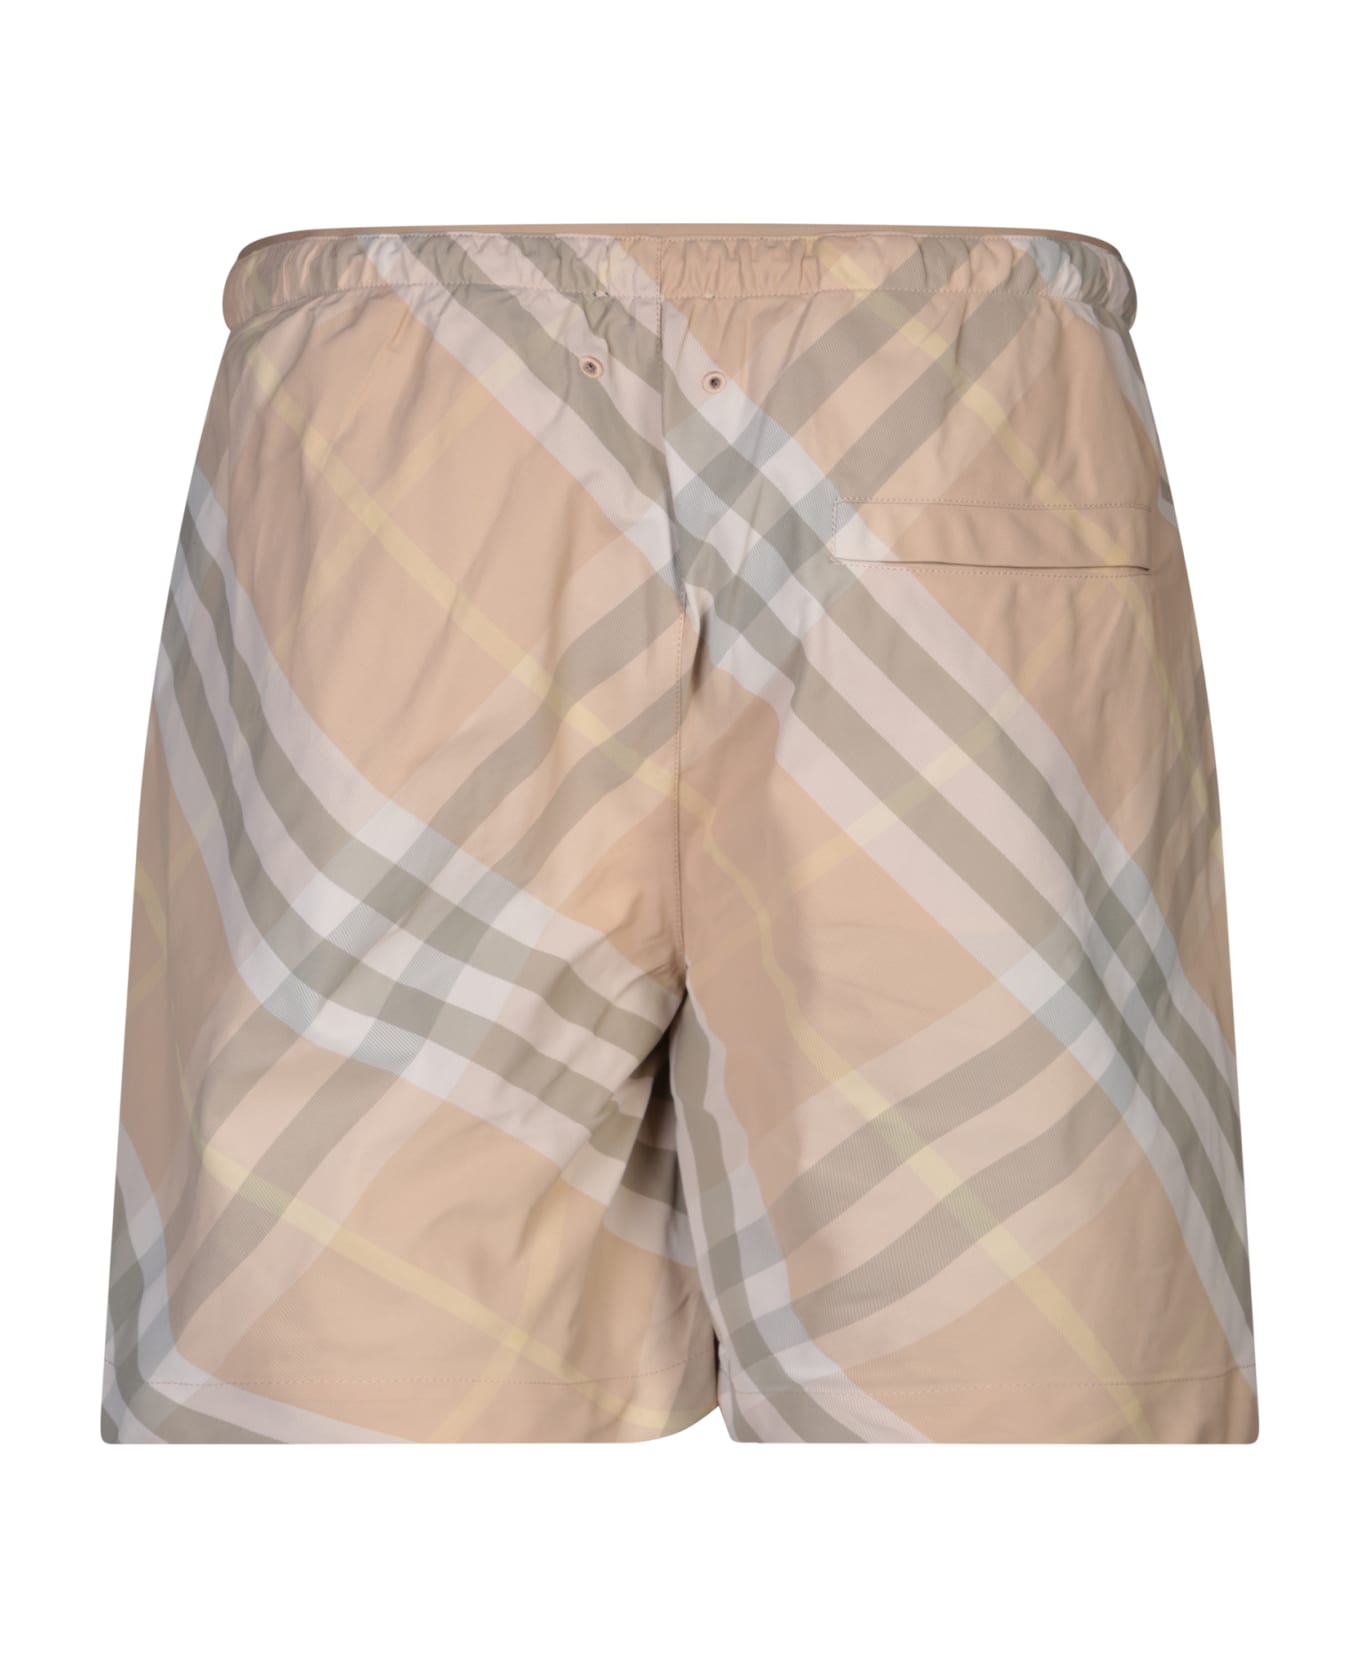 Burberry Check Swim Shorts - Flax Ip Check